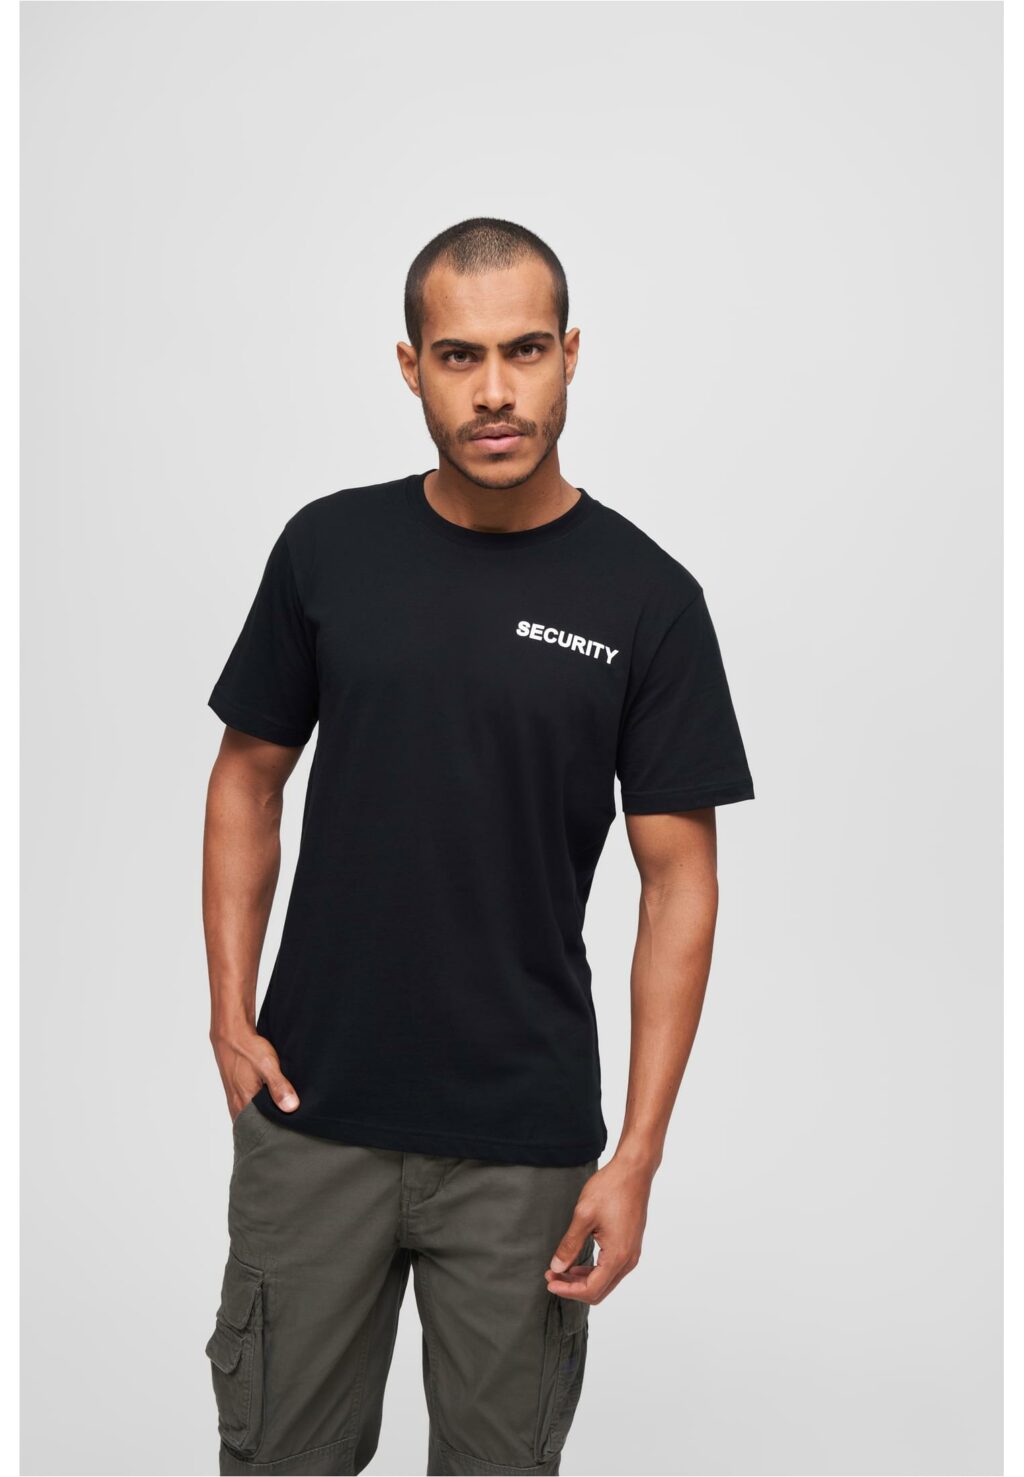 Brandit Security T-Shirt black BD4201